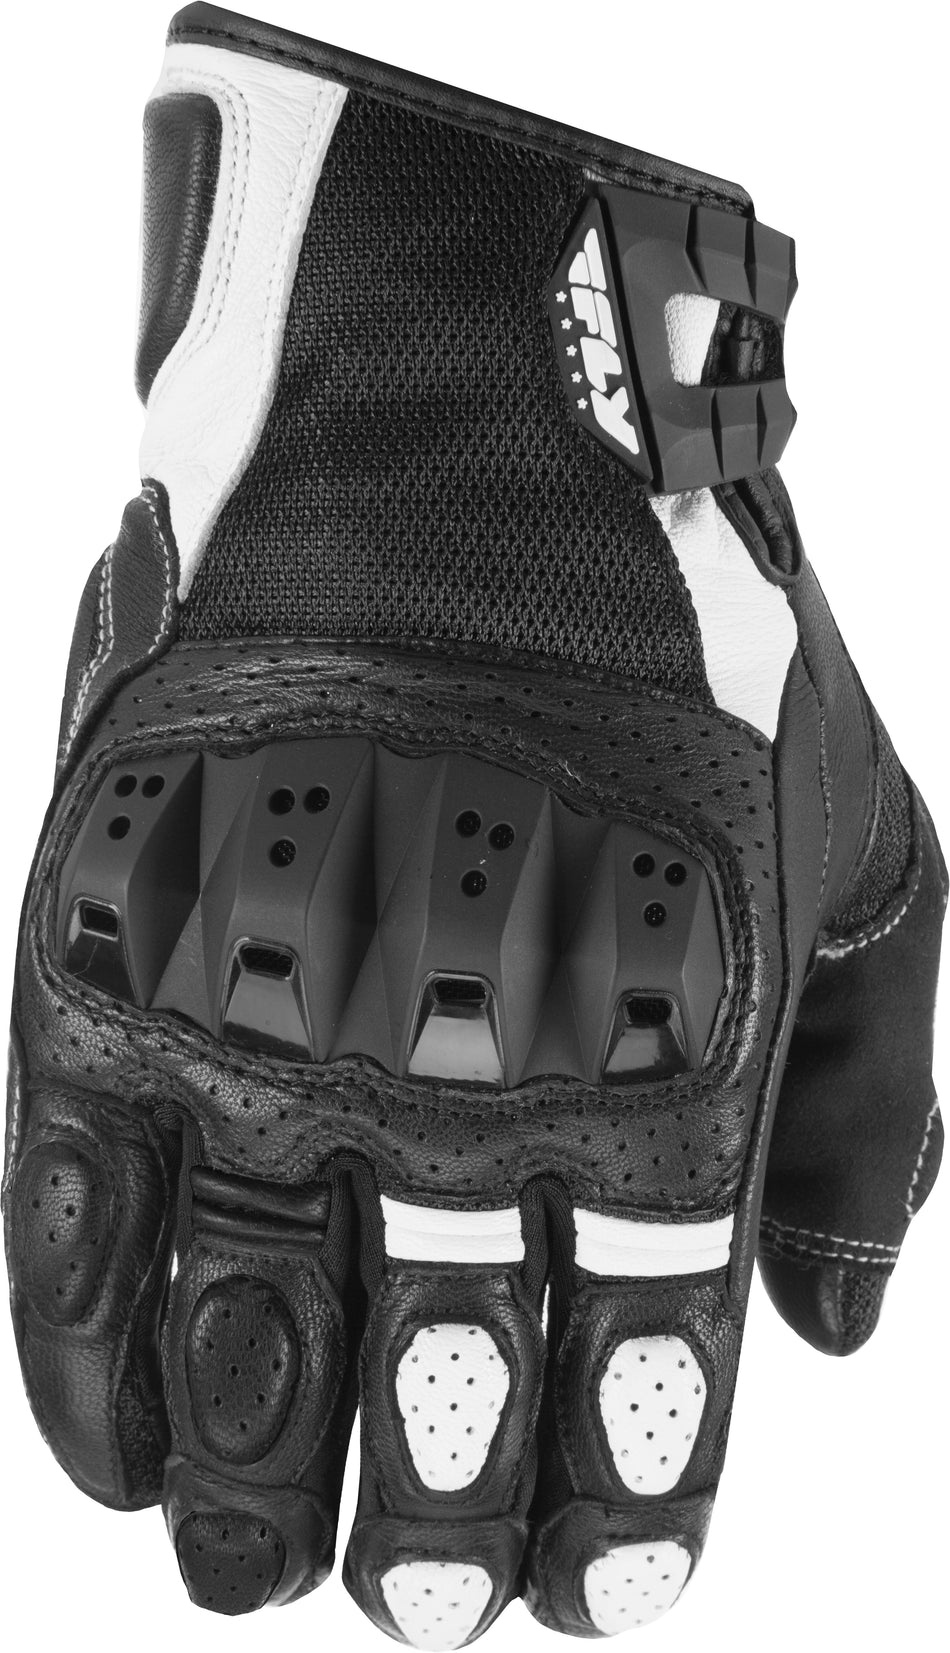 FLY RACING Brawler Gloves Black/White 2x #5884 476-2045~6